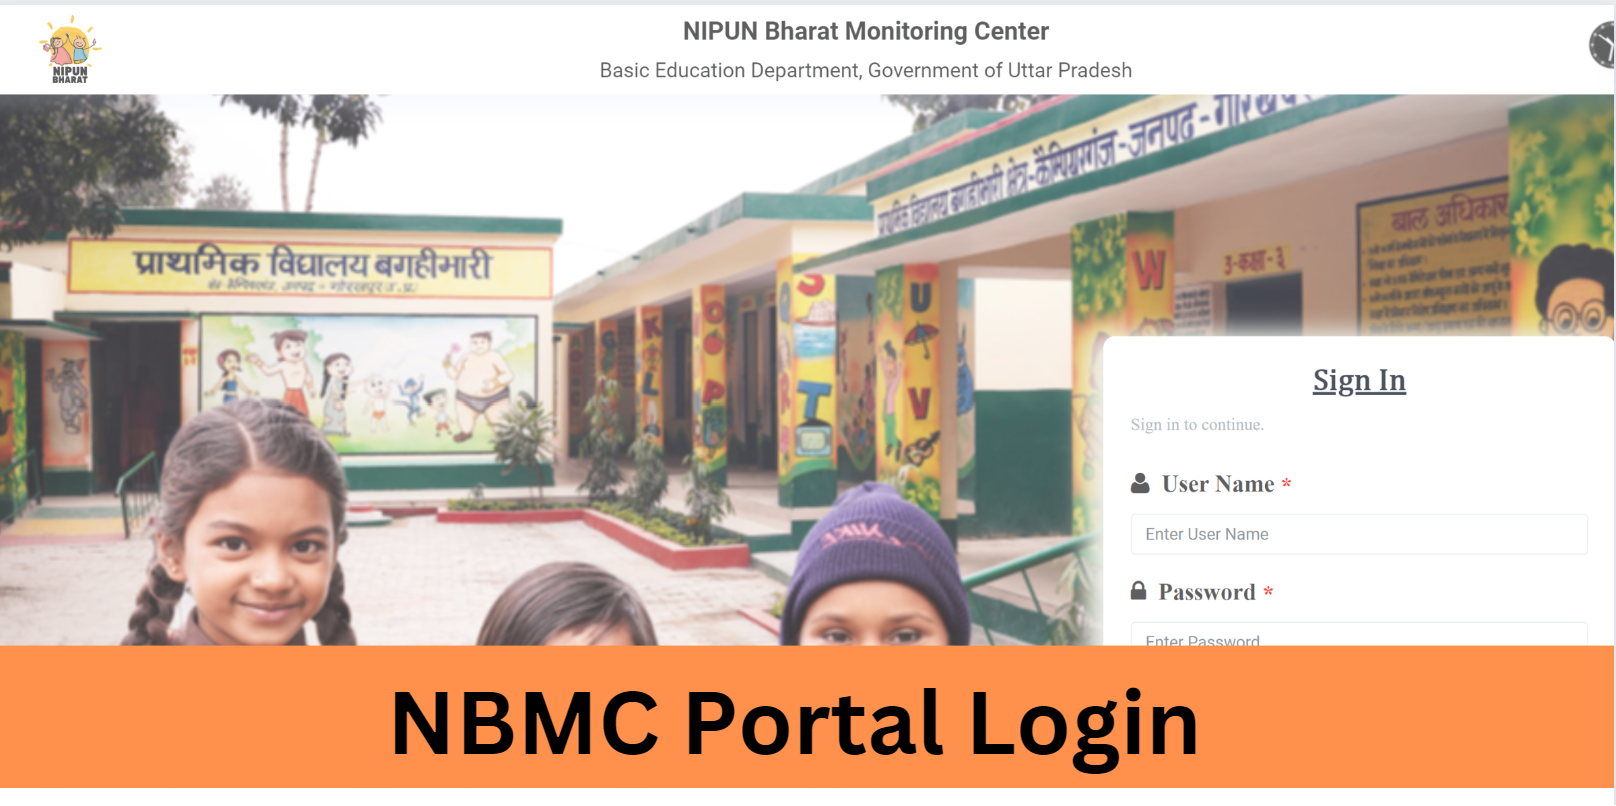 NBMC Portal Login